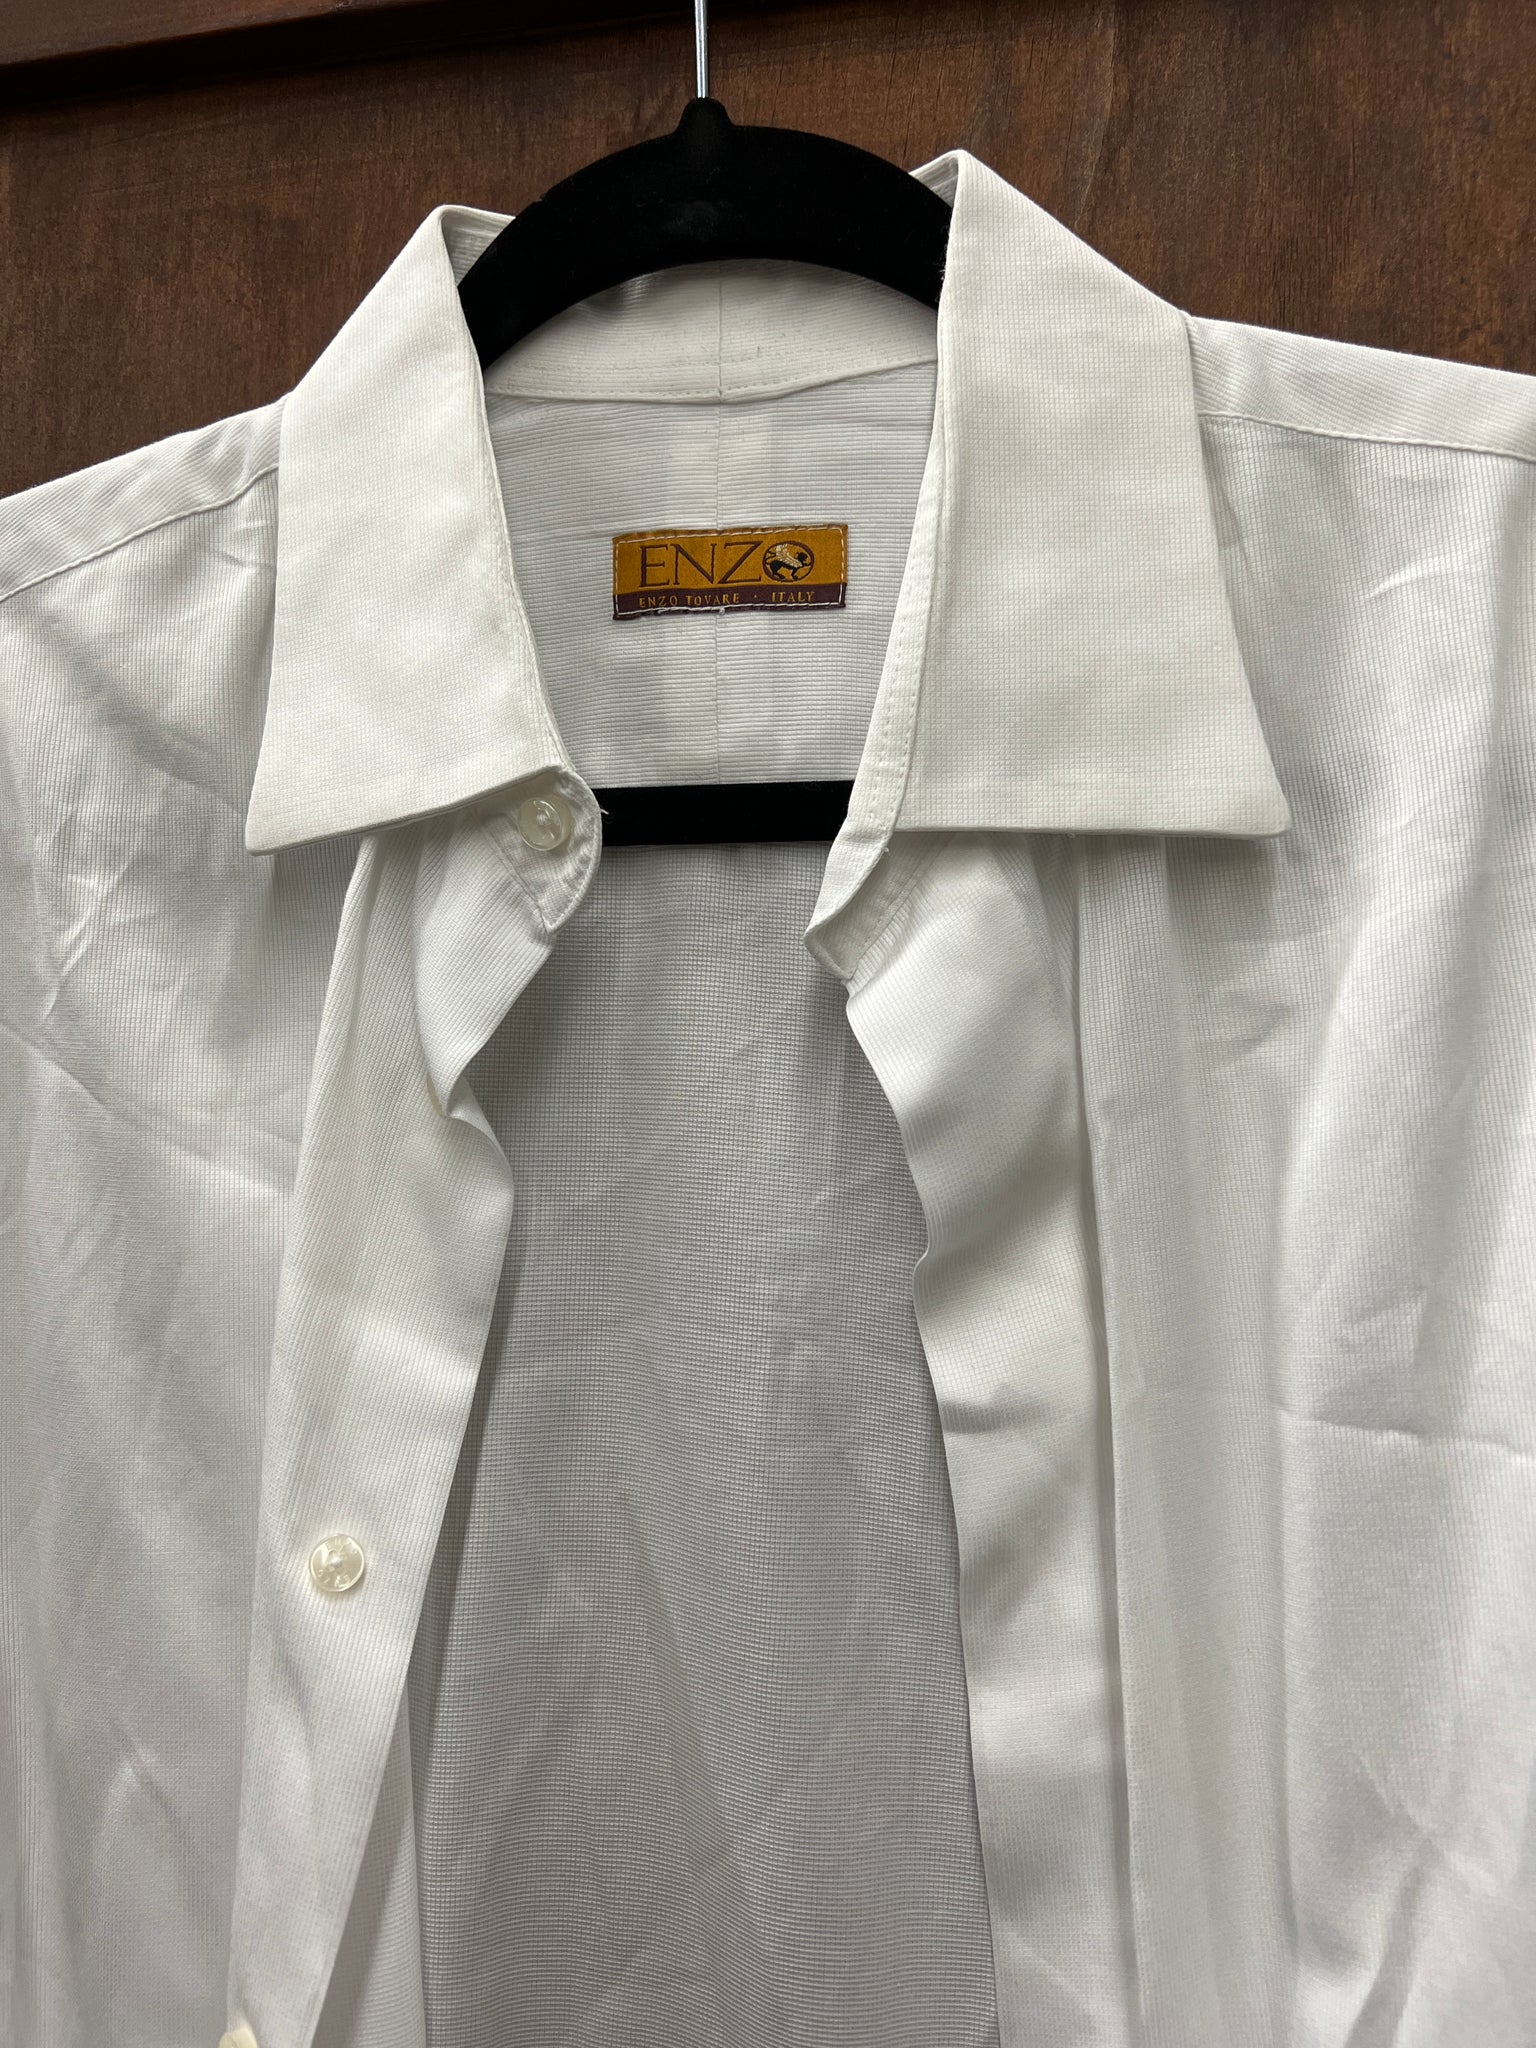 1990s MENS TOP- Enzo white dress shirt tuxedo cuffs